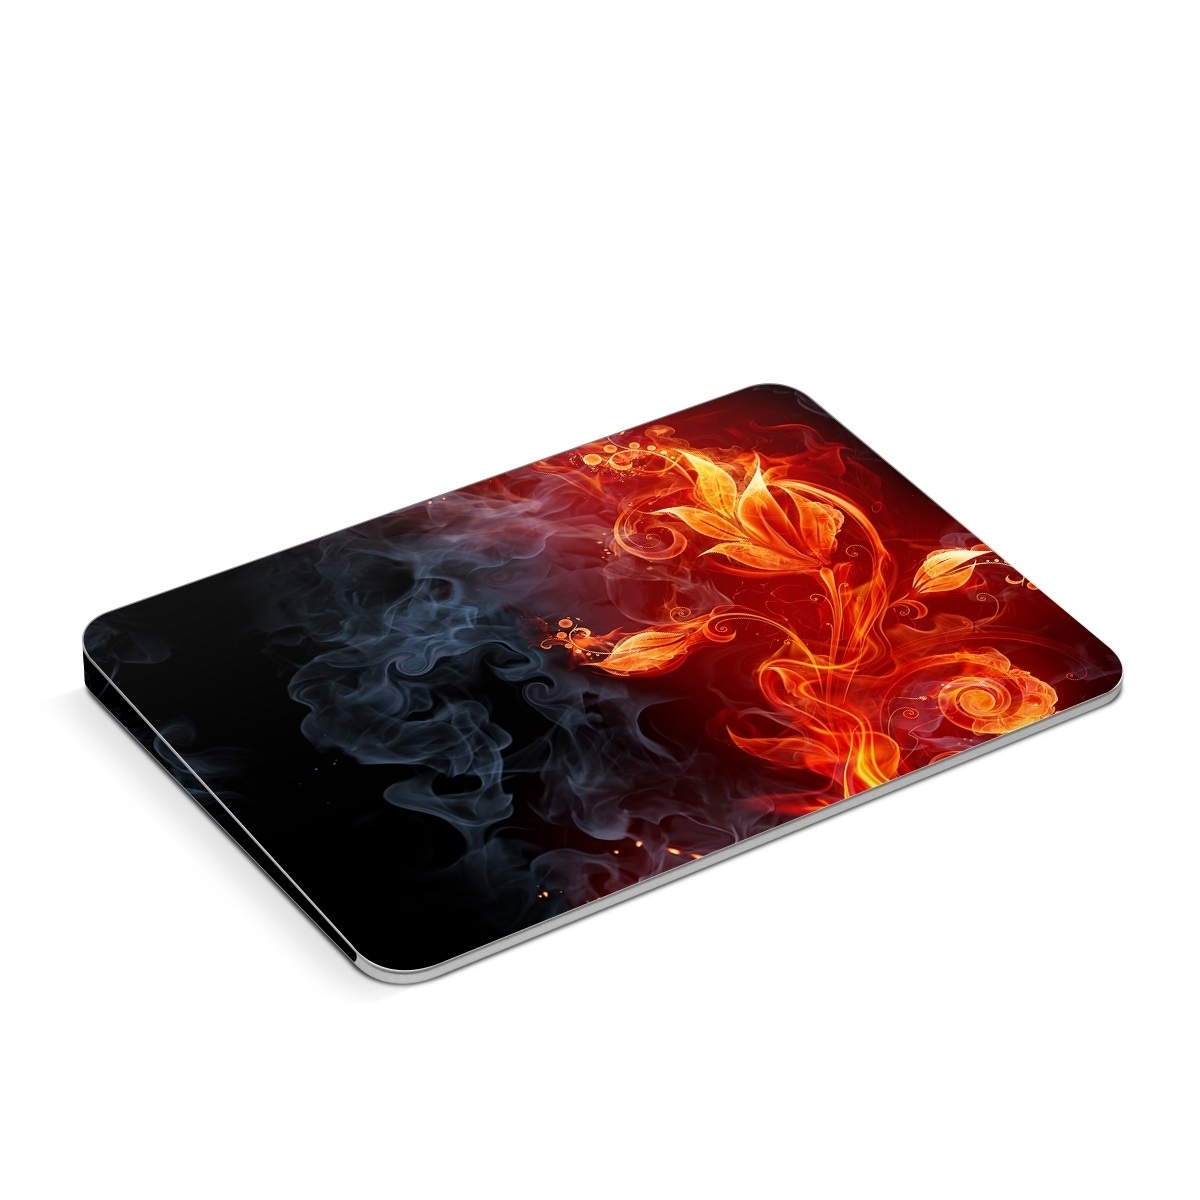 Apple Magic Trackpad Skin design of Flame, Fire, Heat, Red, Orange, Fractal art, Graphic design, Geological phenomenon, Design, Organism, with black, red, orange colors